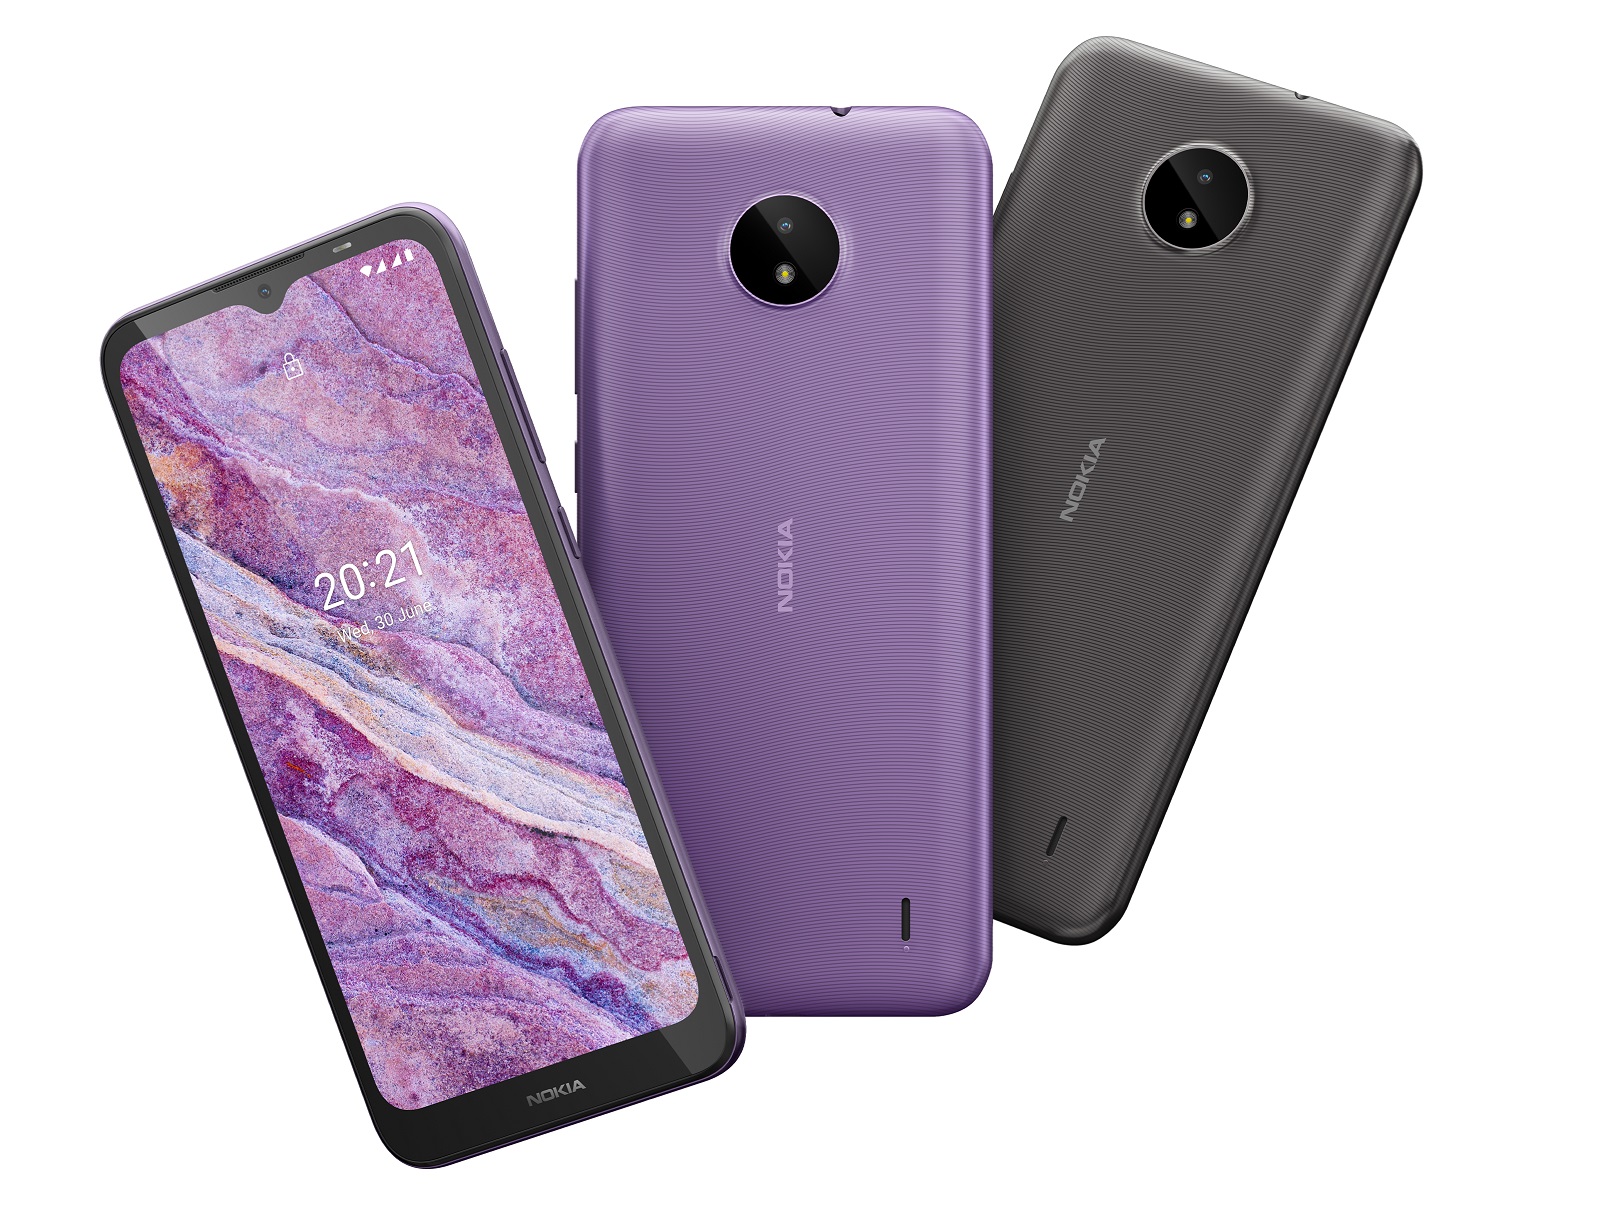 6 new Nokia smartphones announced across different price ranges - Gearburn